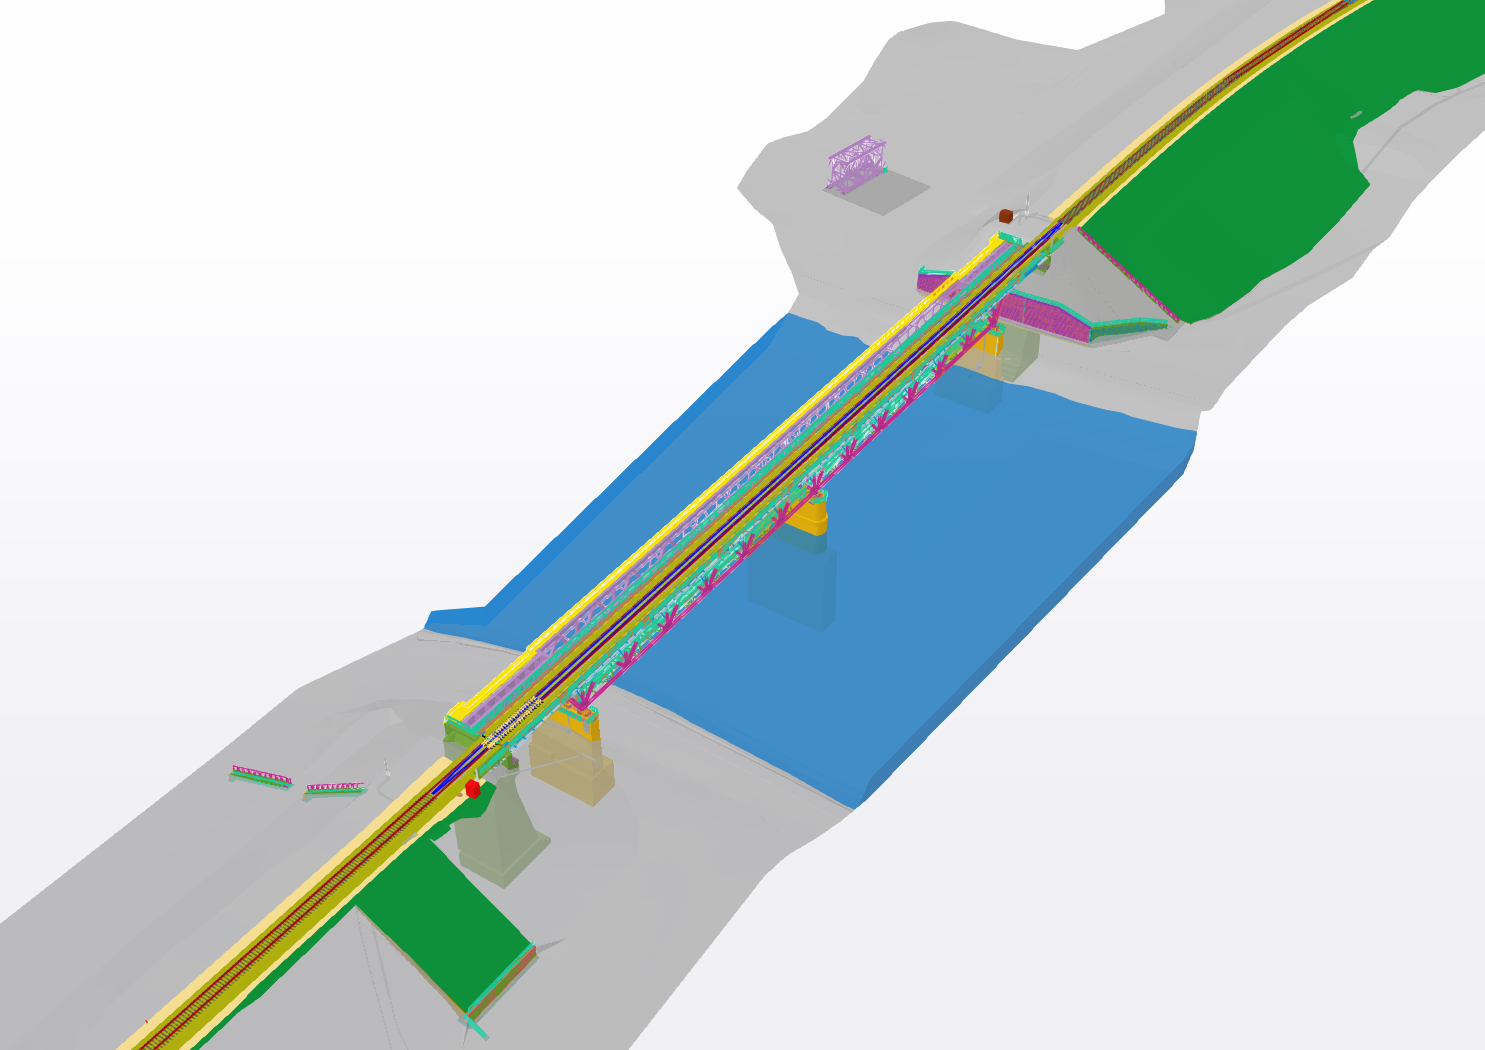 BIM praktikos taikymas Jonavos gelezinkelio tilto rekonstrukcijos projekte 2